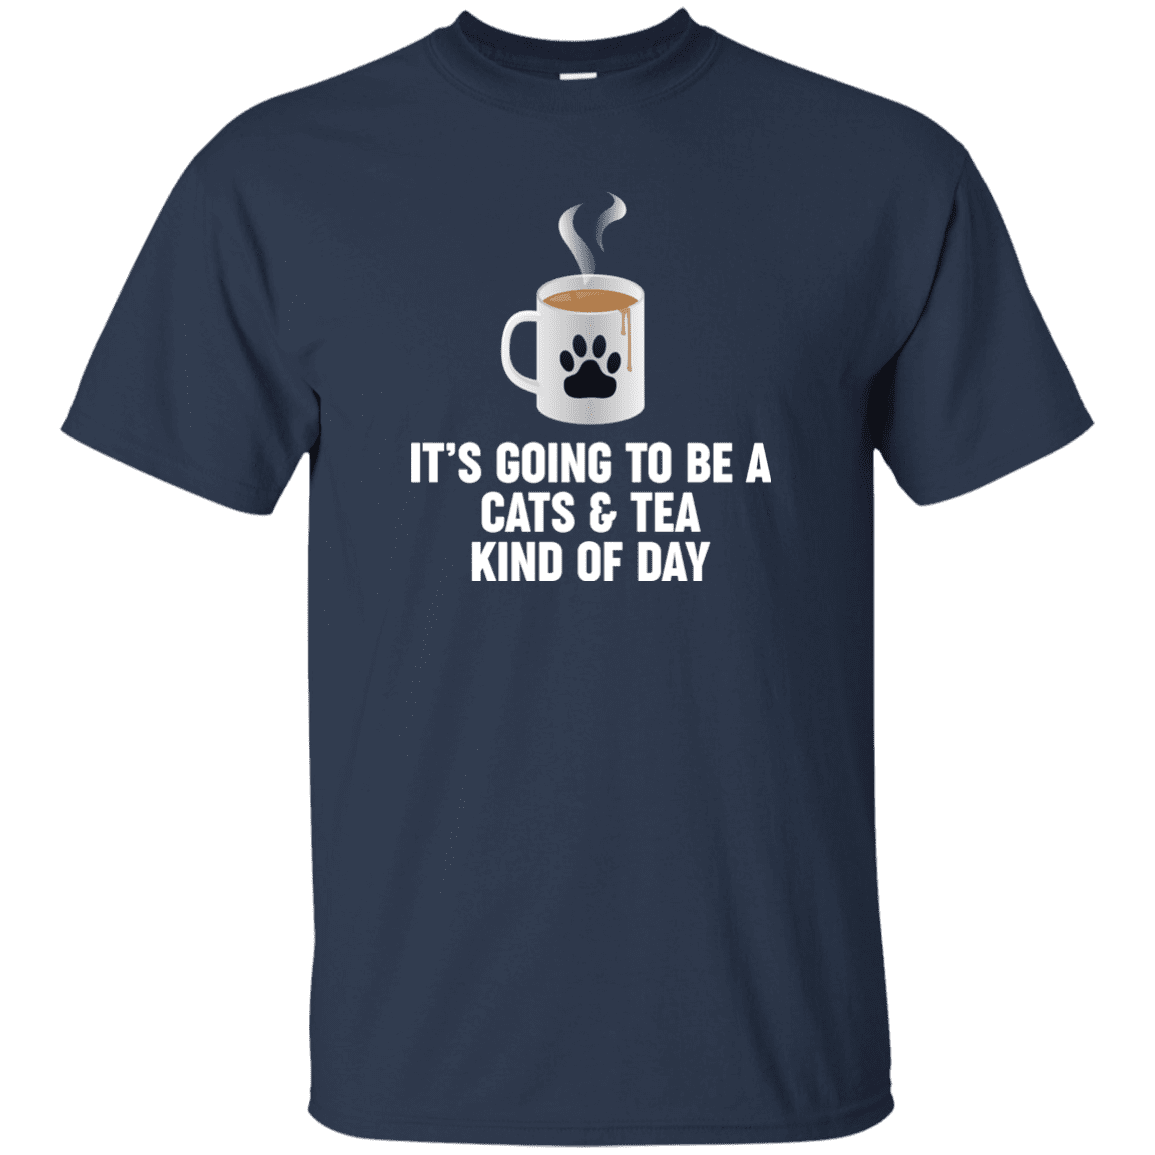 Cats And Tea - T Shirt.